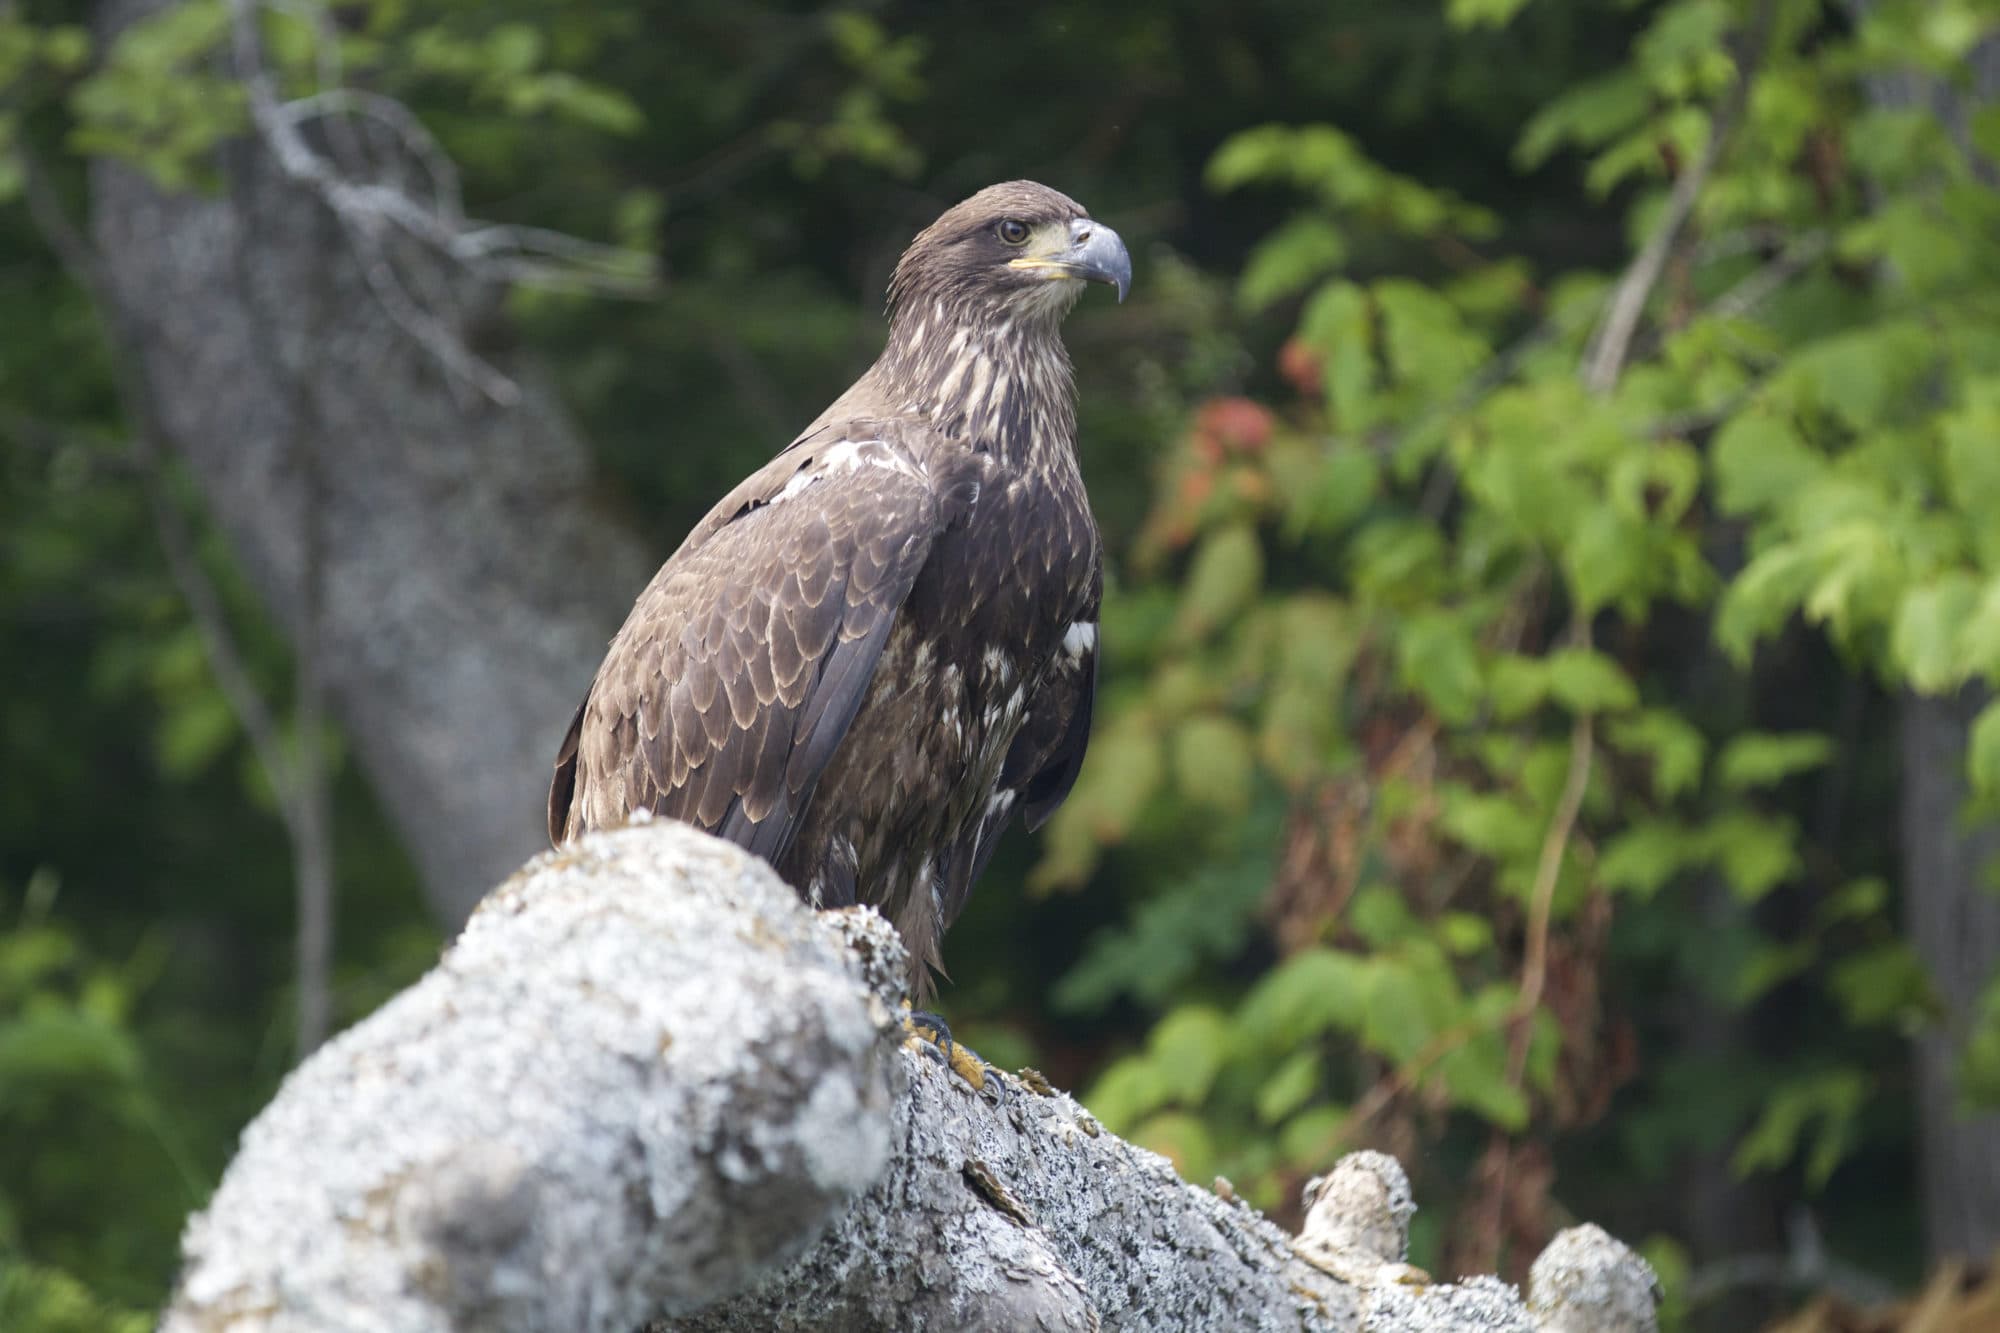 A majestic gold eagle surveys her domain